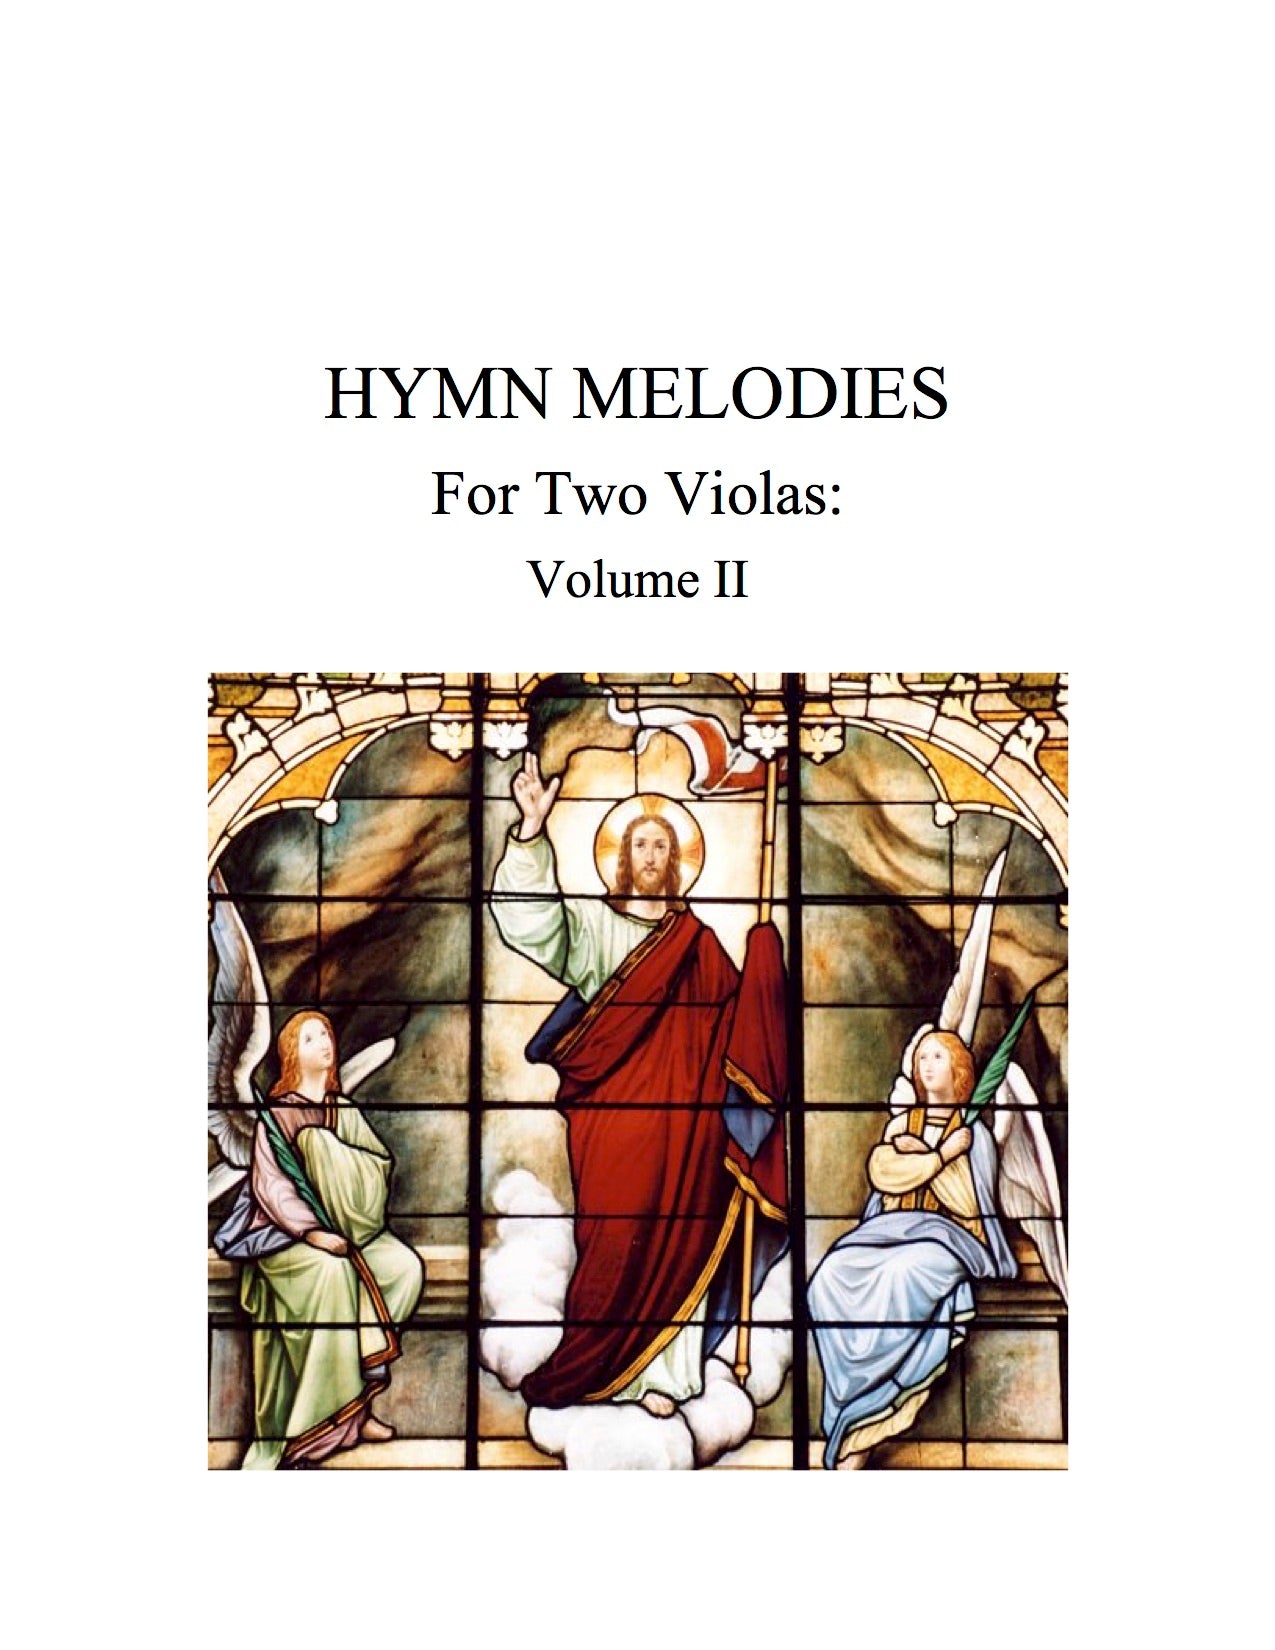 077 - Hymn Melodies for Two Violas, Volume II